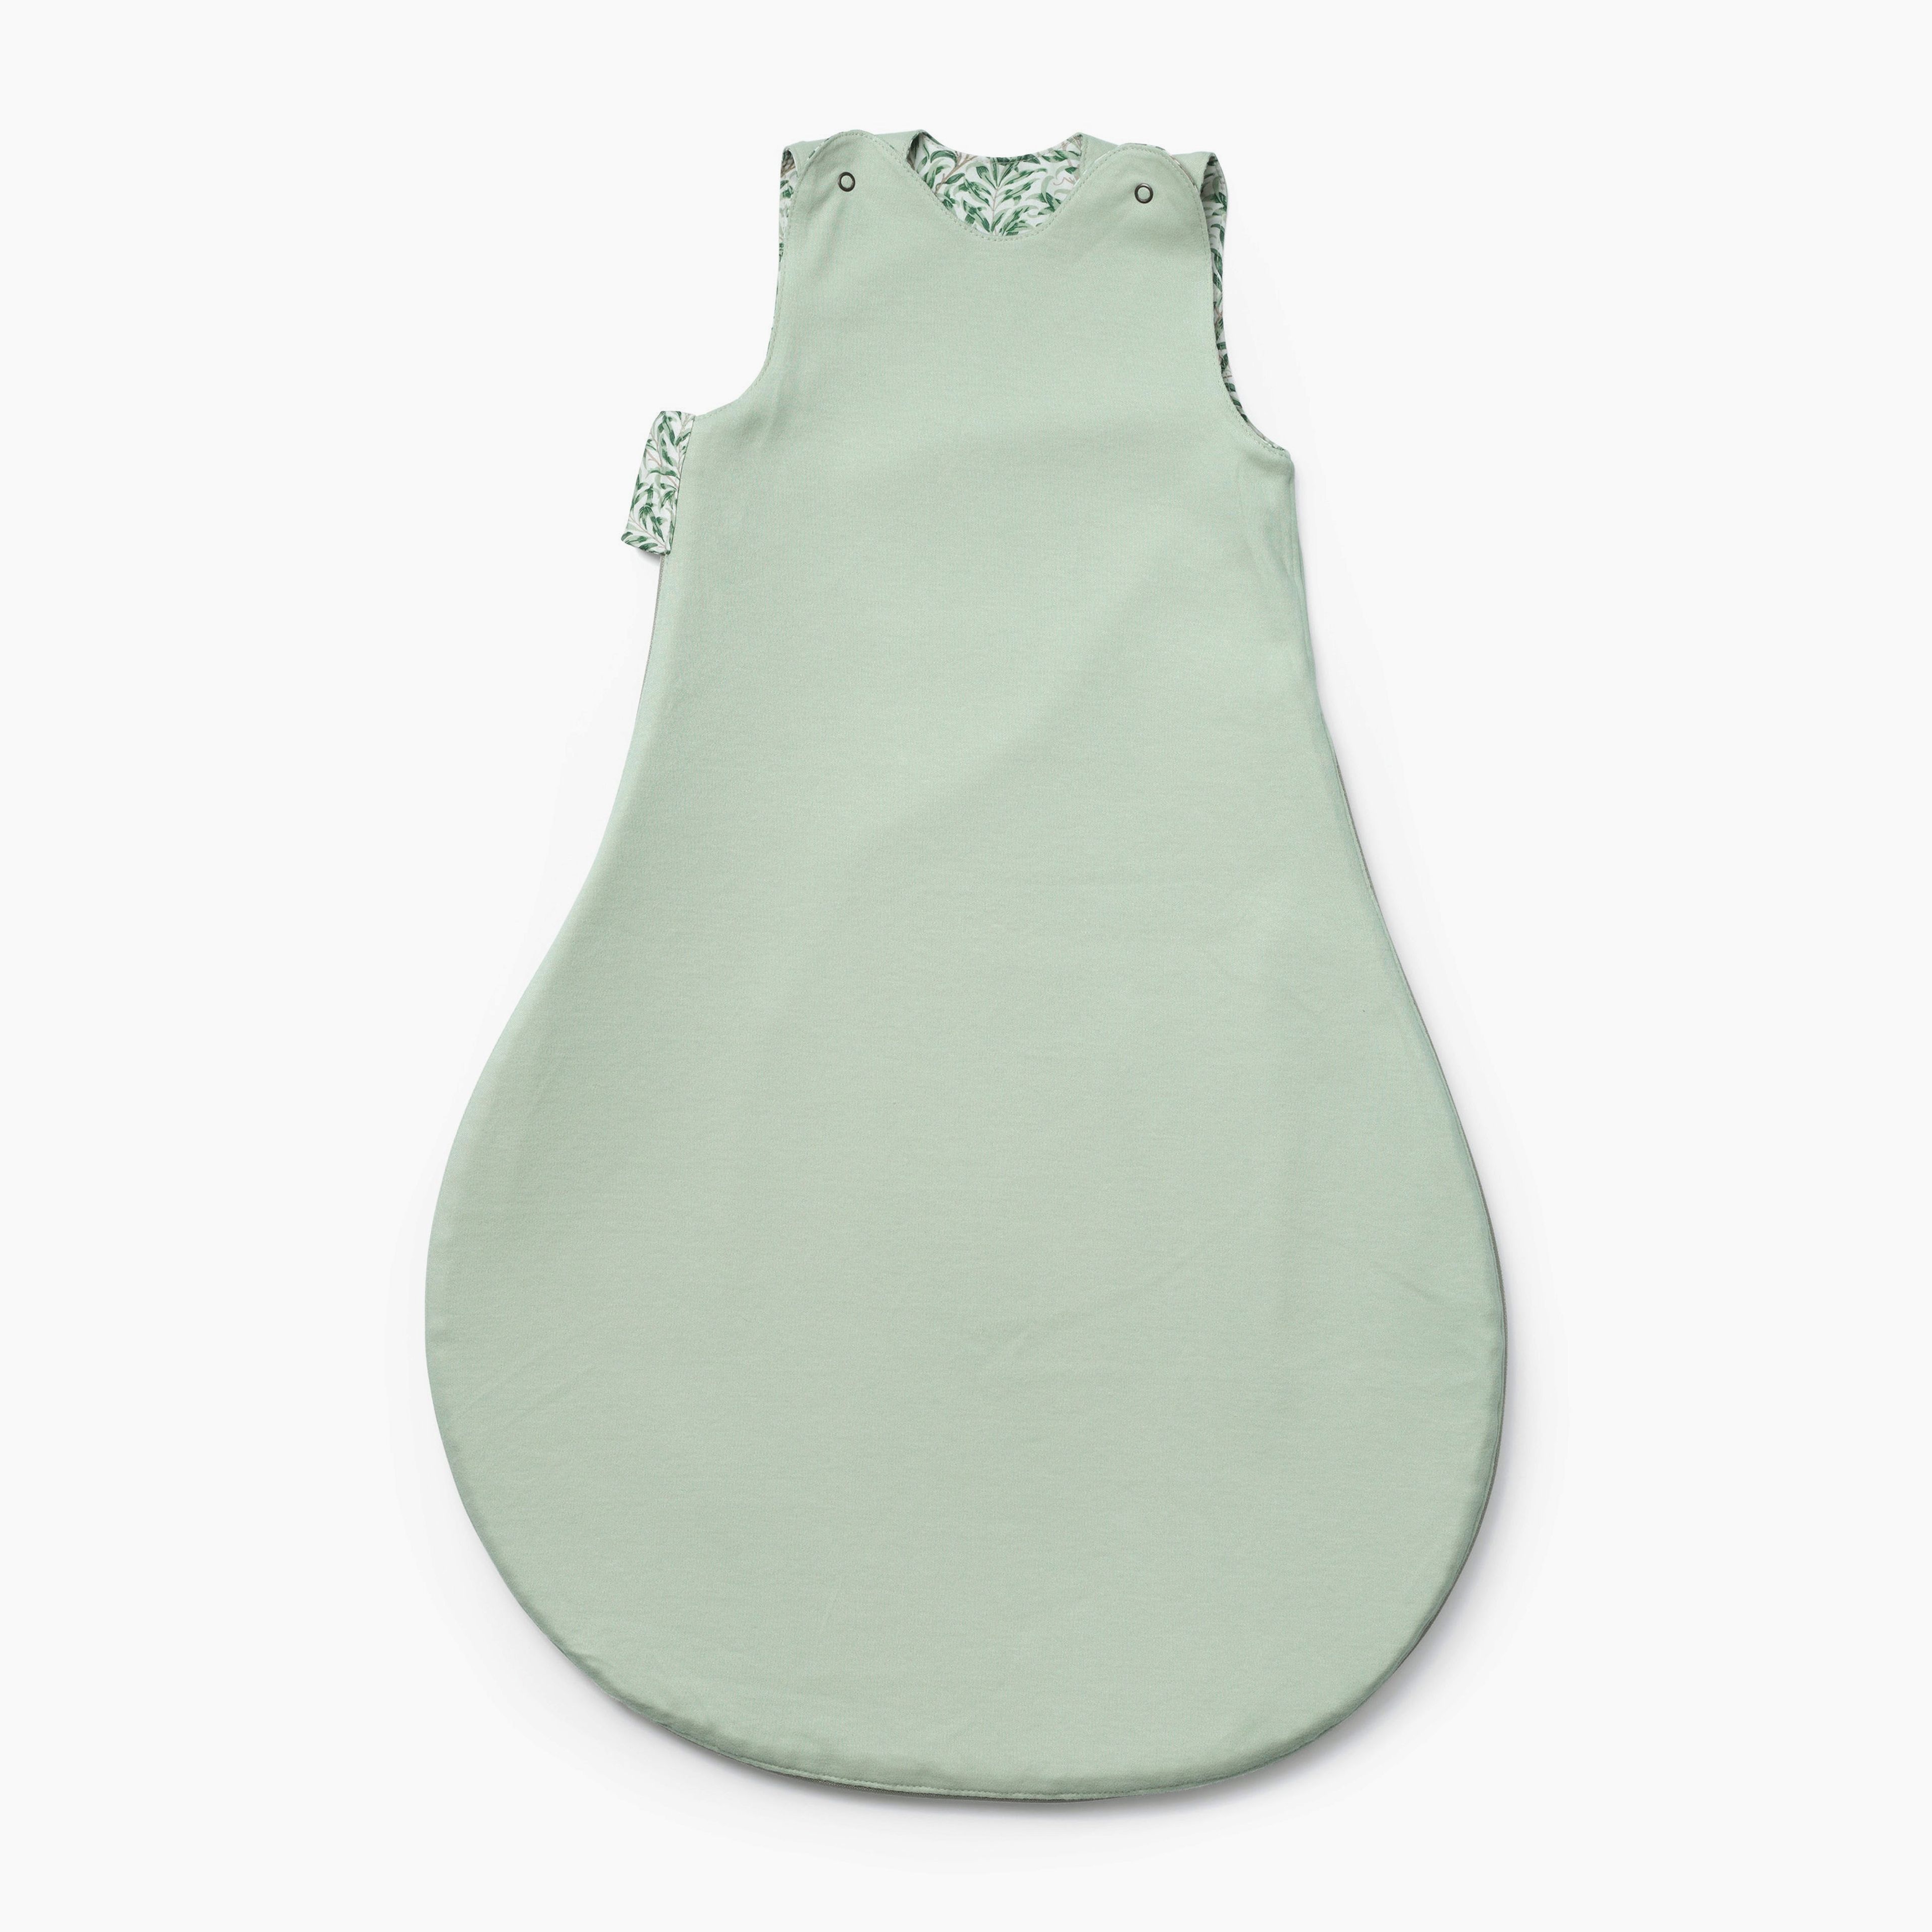 DockATot Sleep Bag - Willow Boughs / Smoke Green